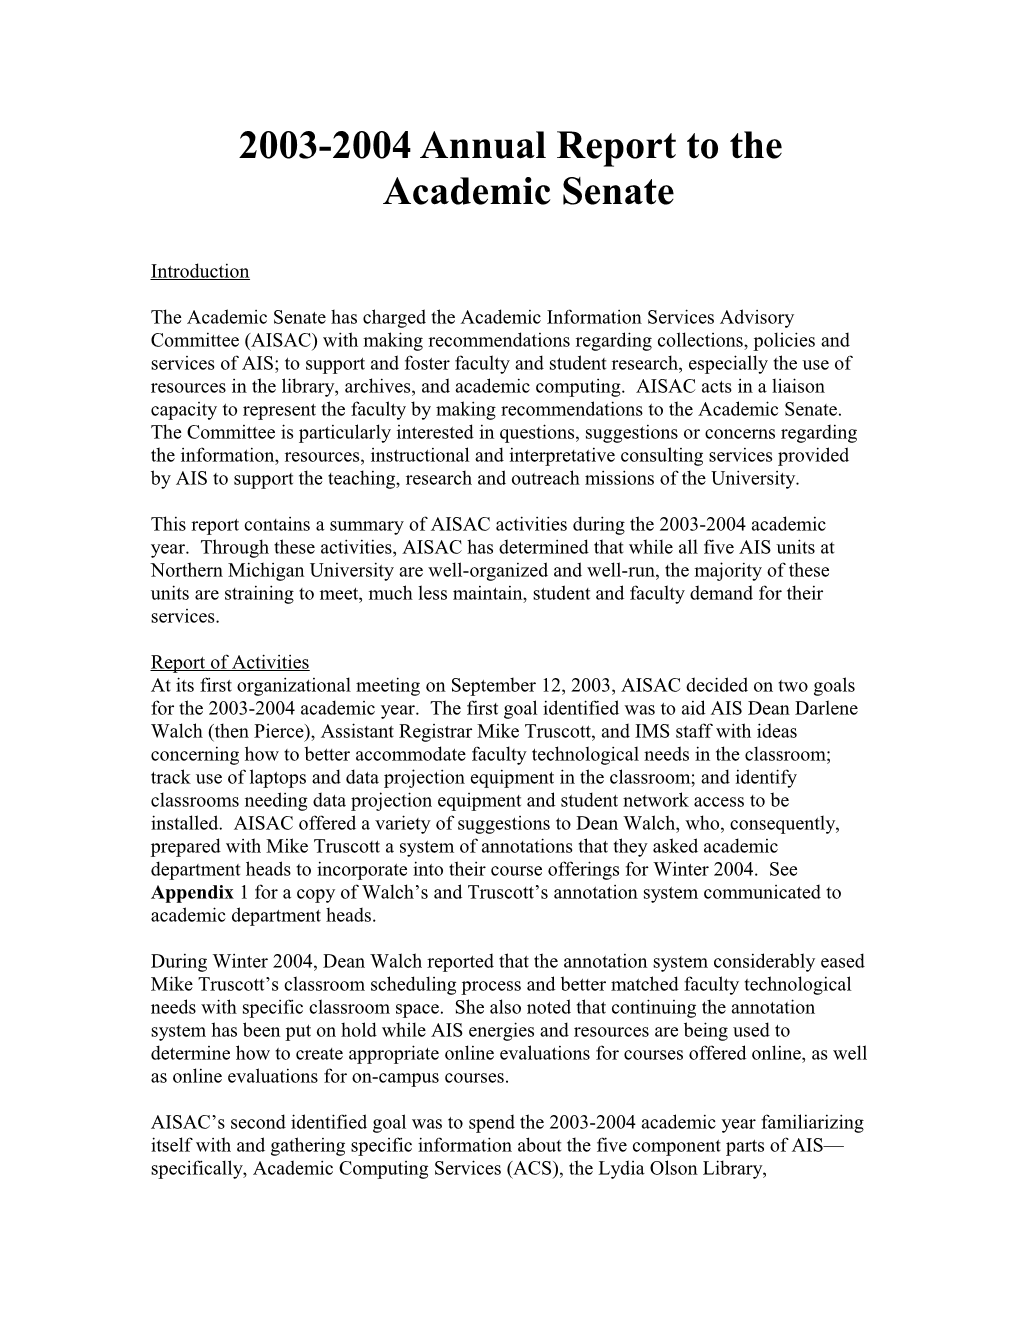 2003-2004 Annual Report to the Academic Senate